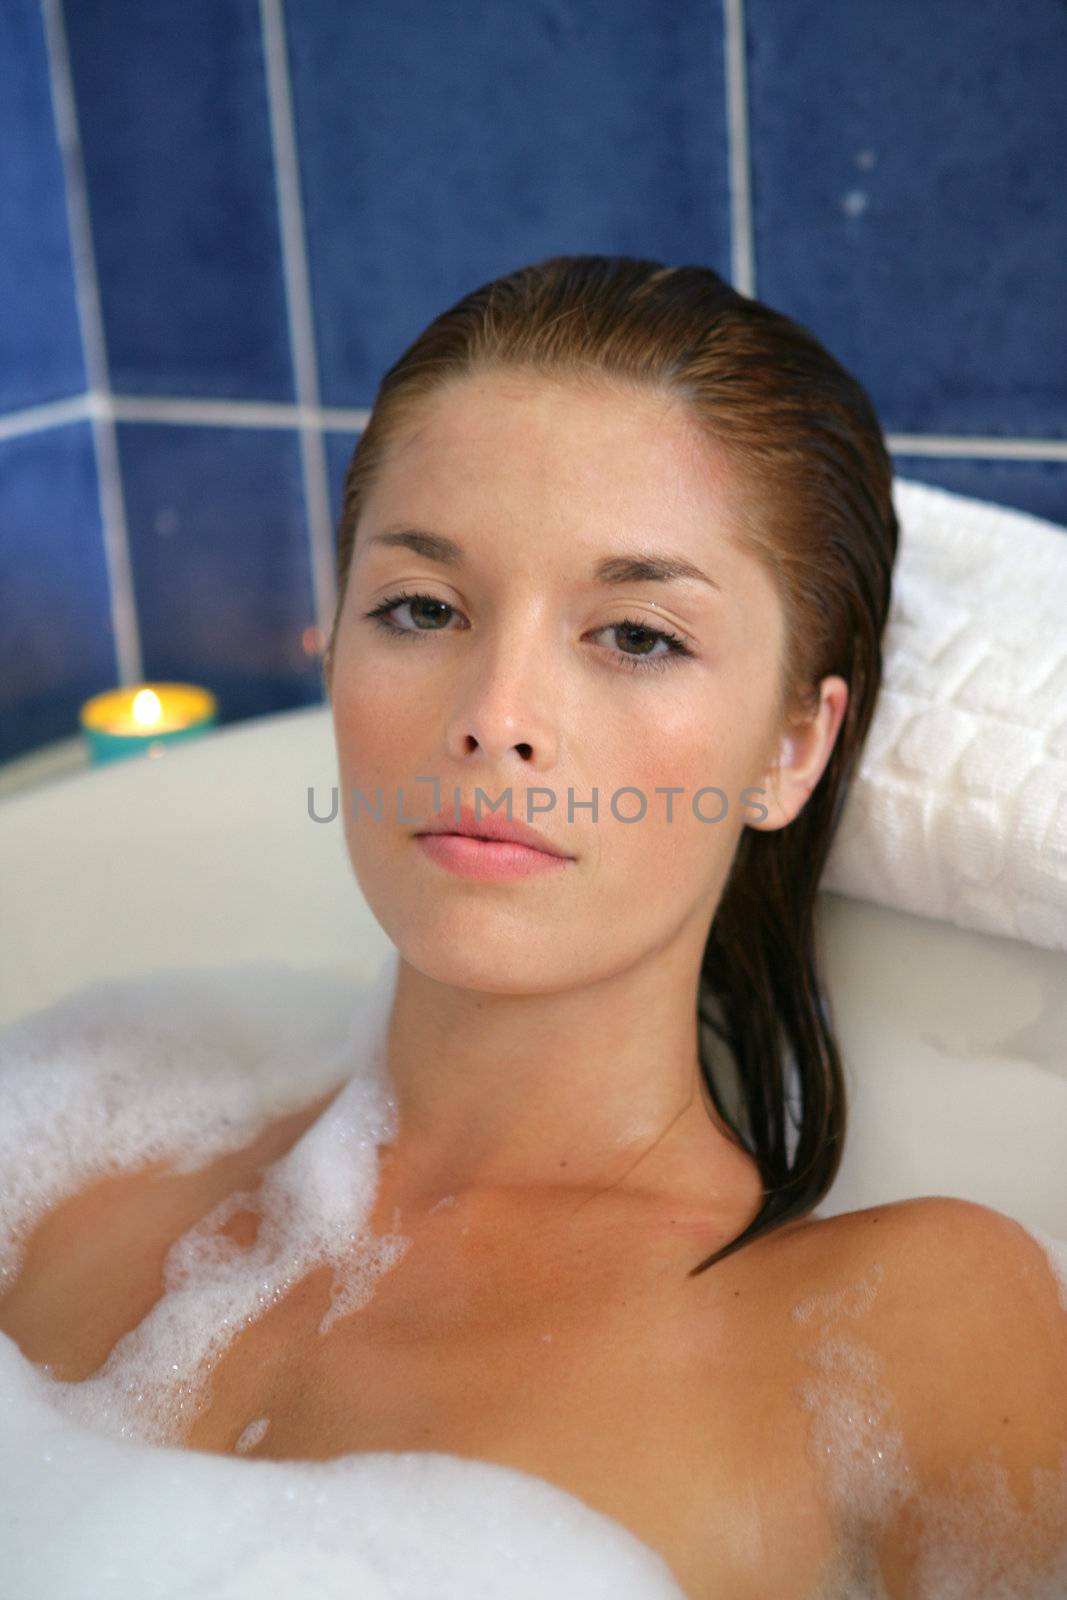 Woman having a bubble bath